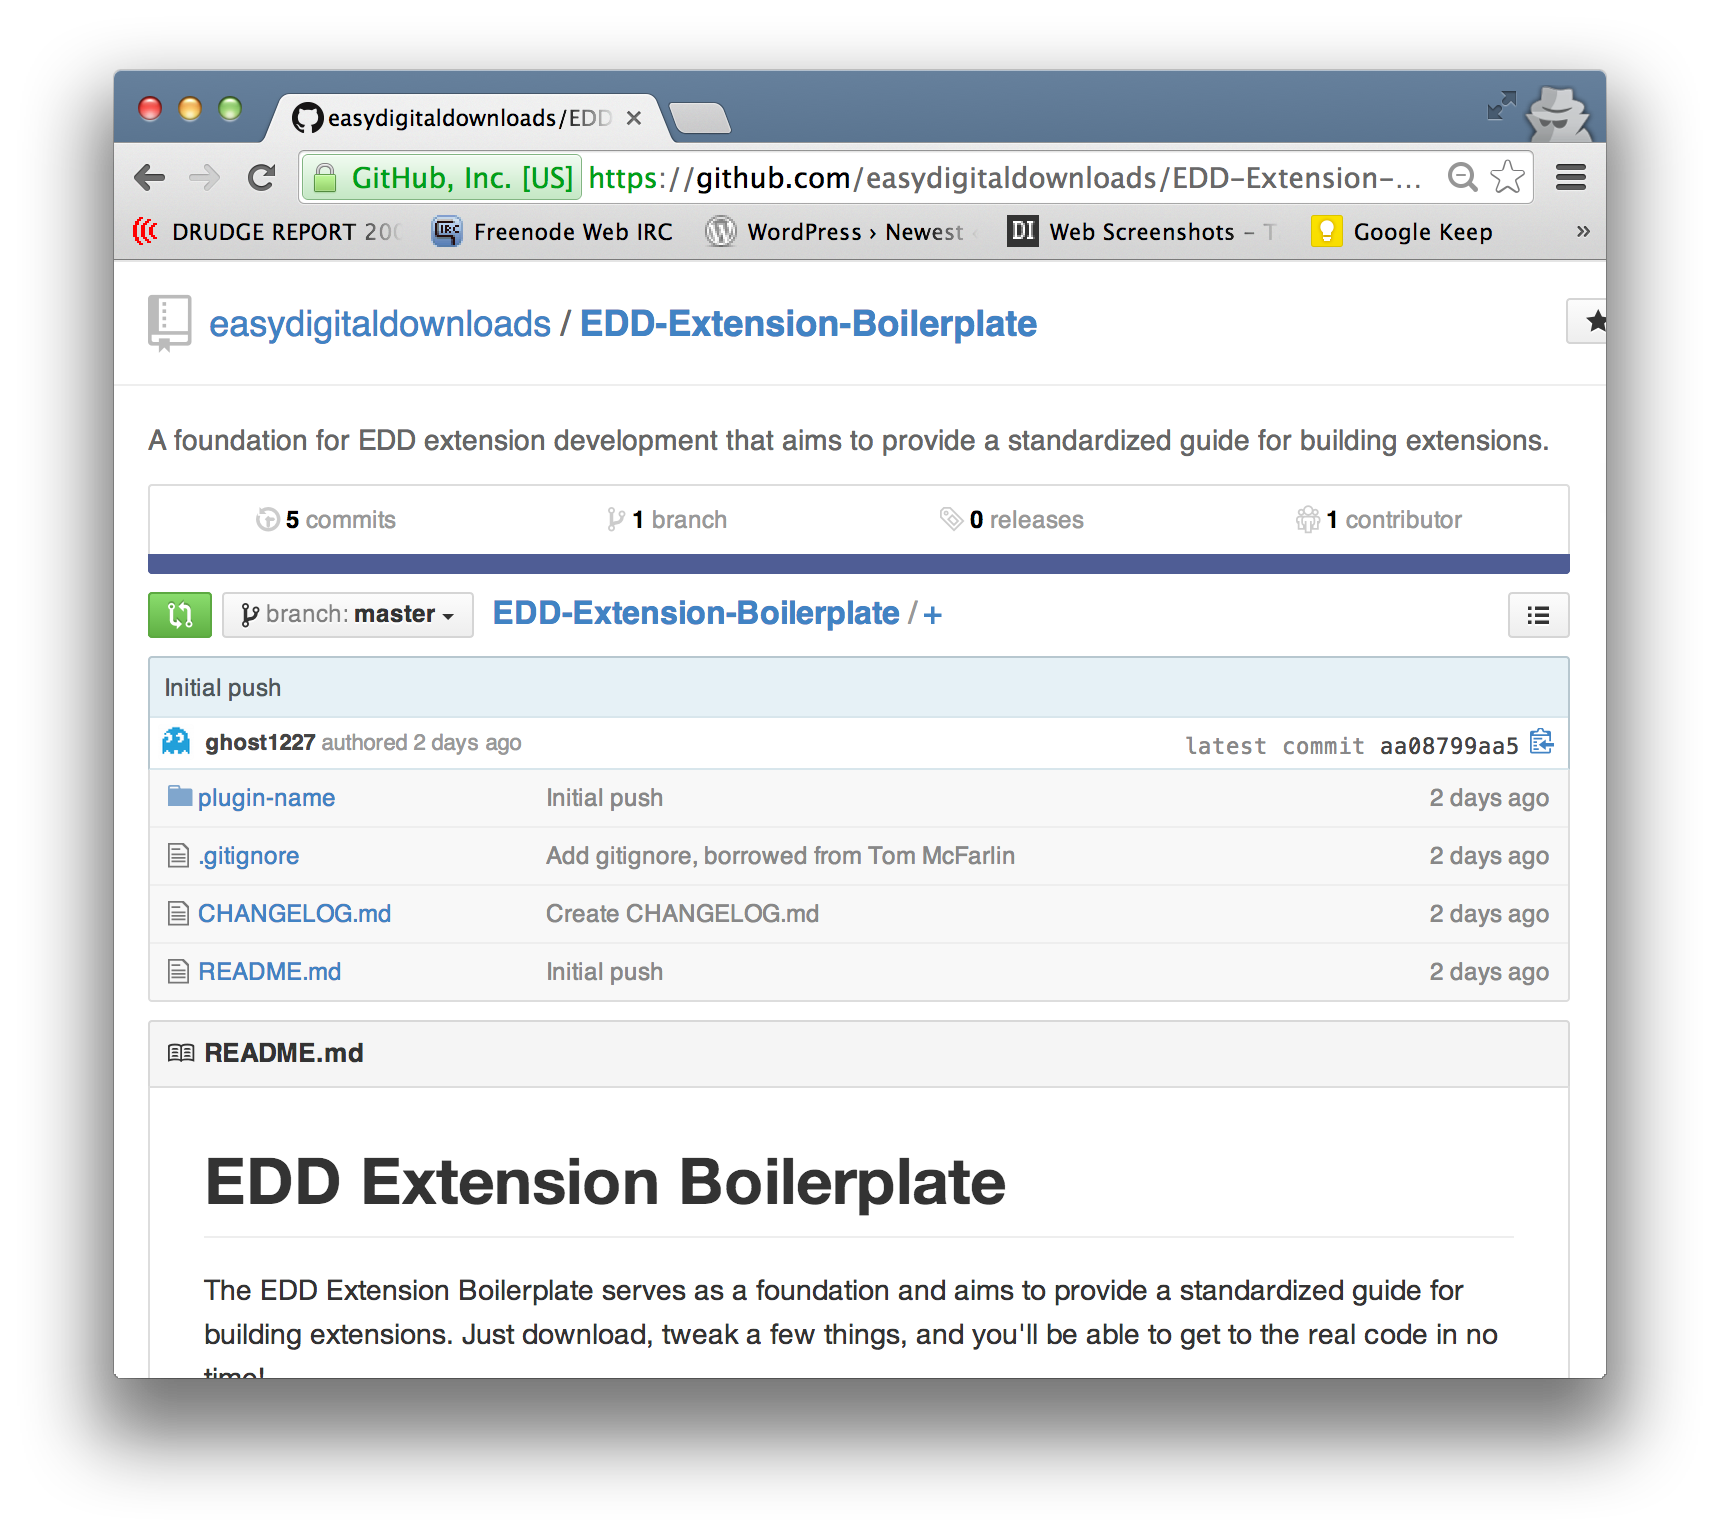 edd-extension-boilerplate